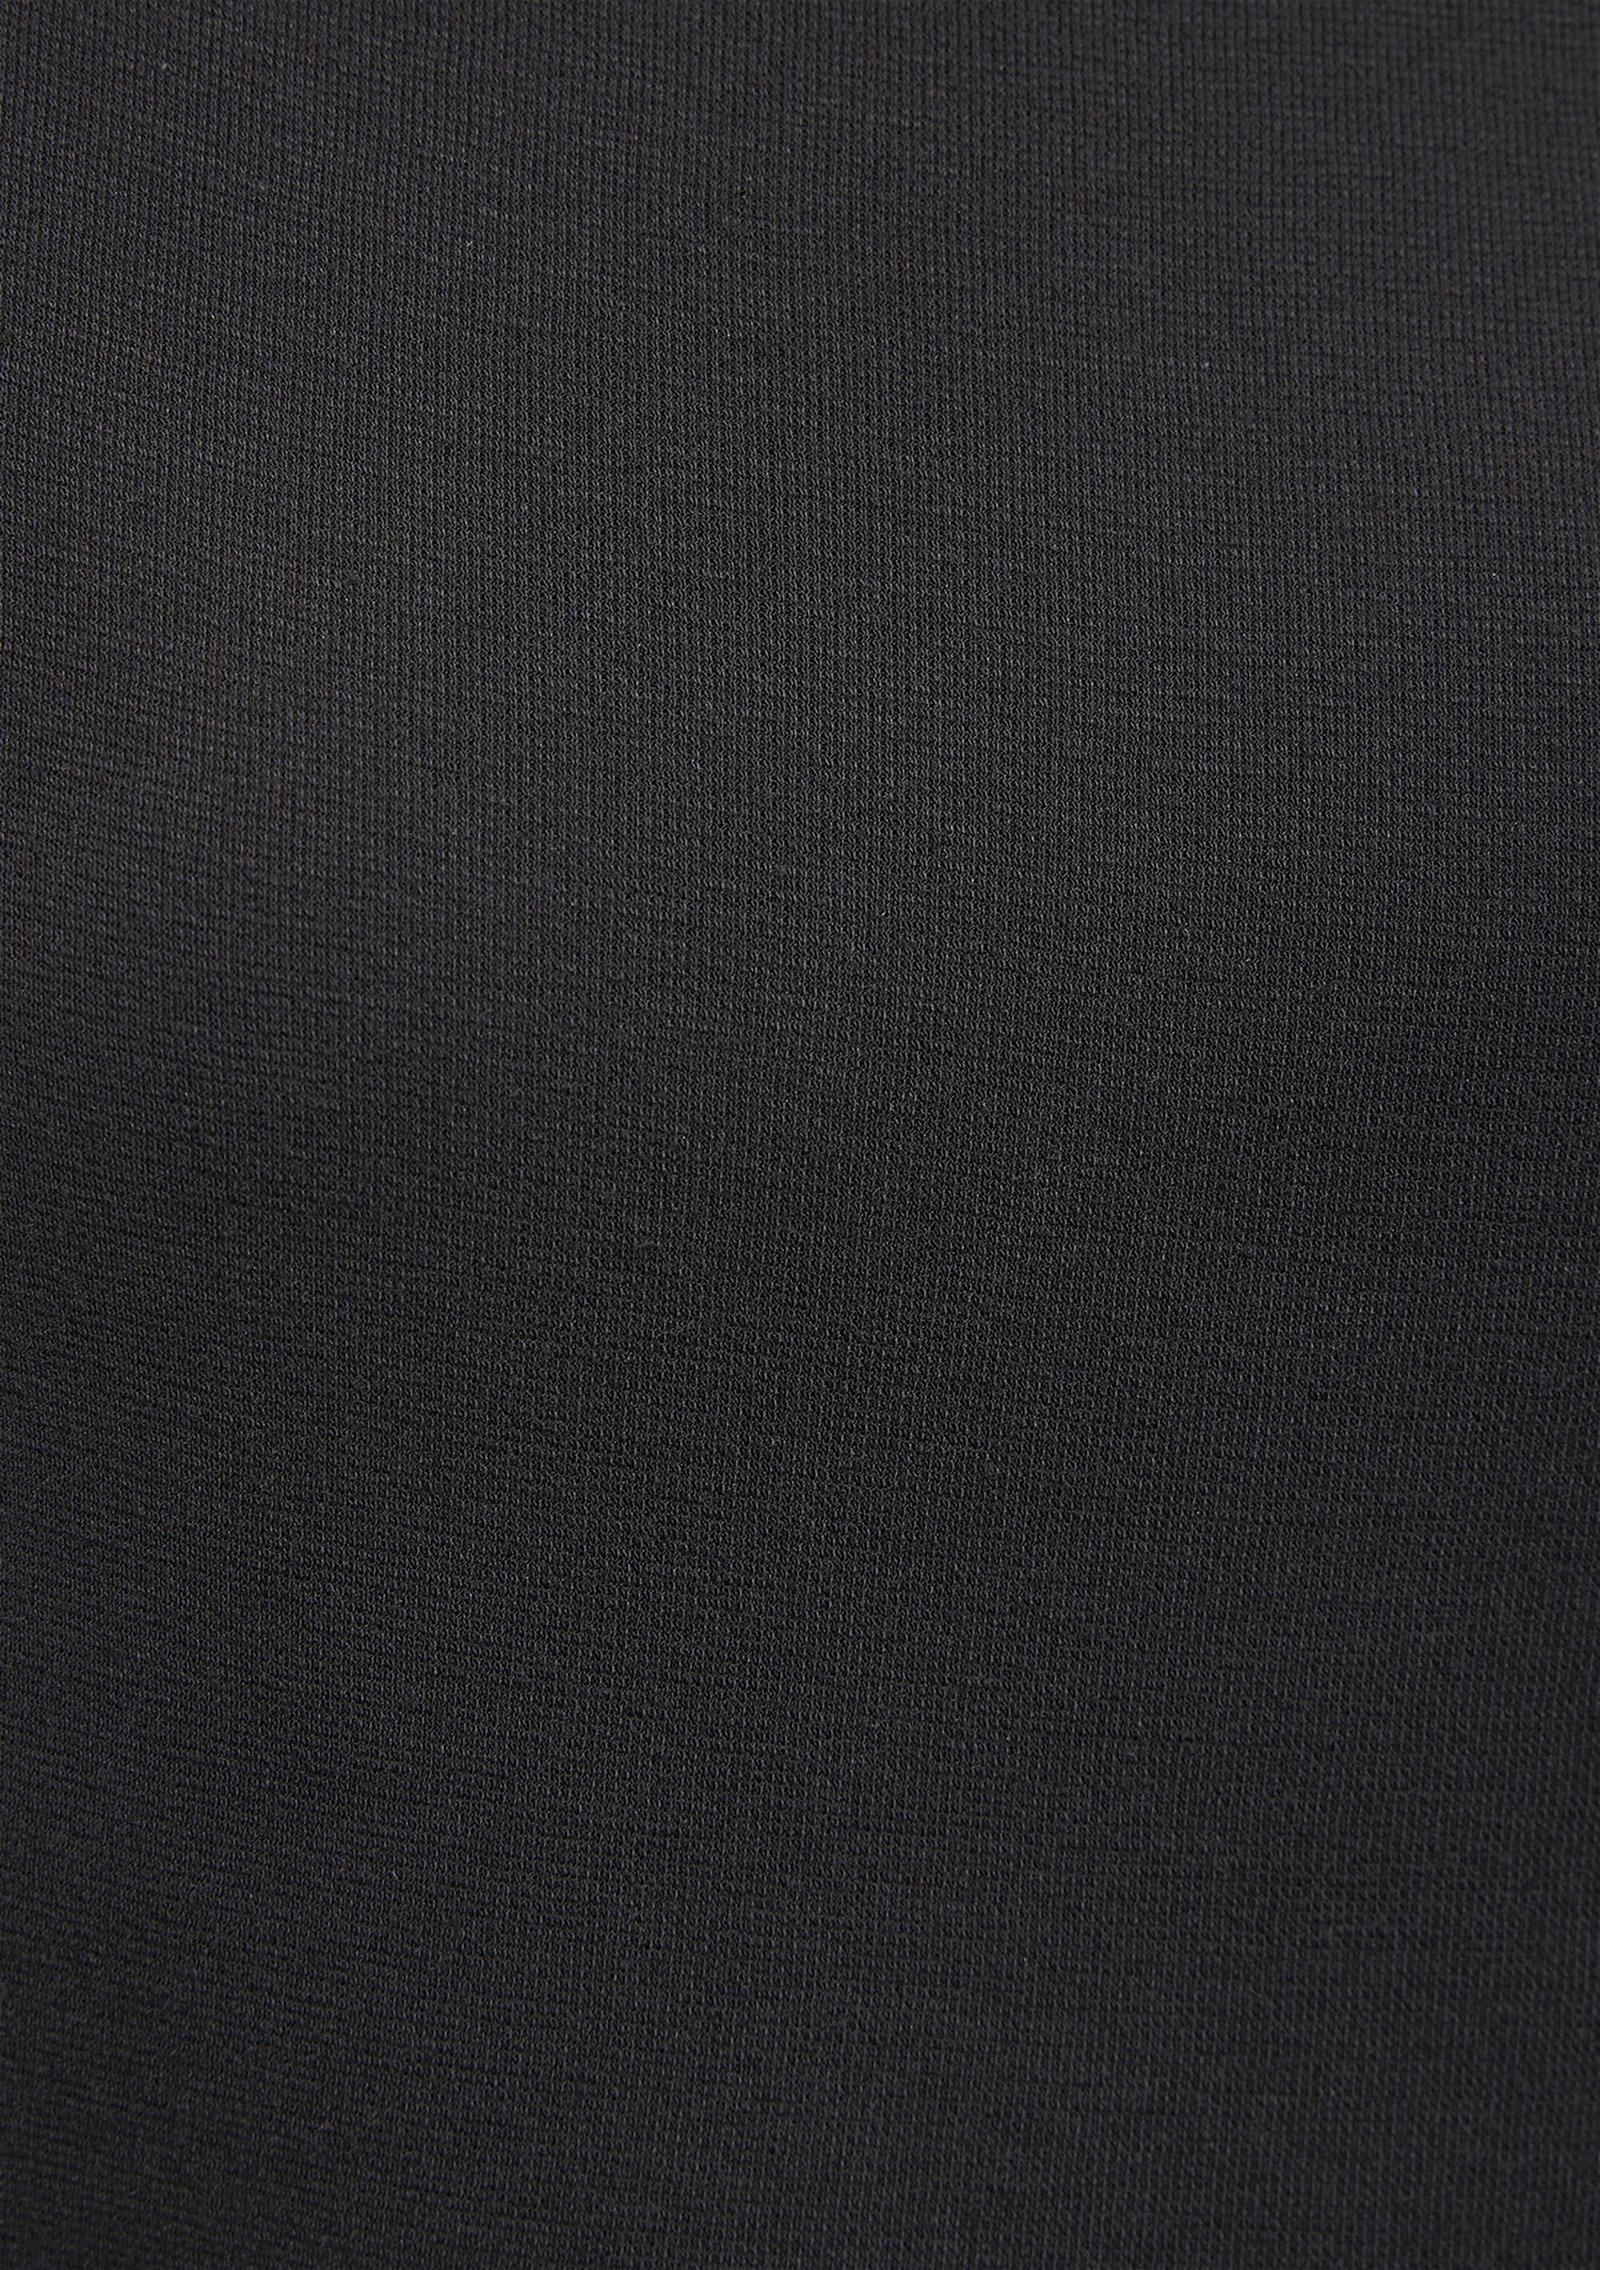 Mavi Çift Kat Detaylı Siyah Tişört Fitted / Vücuda Oturan Kesim 1612172-900